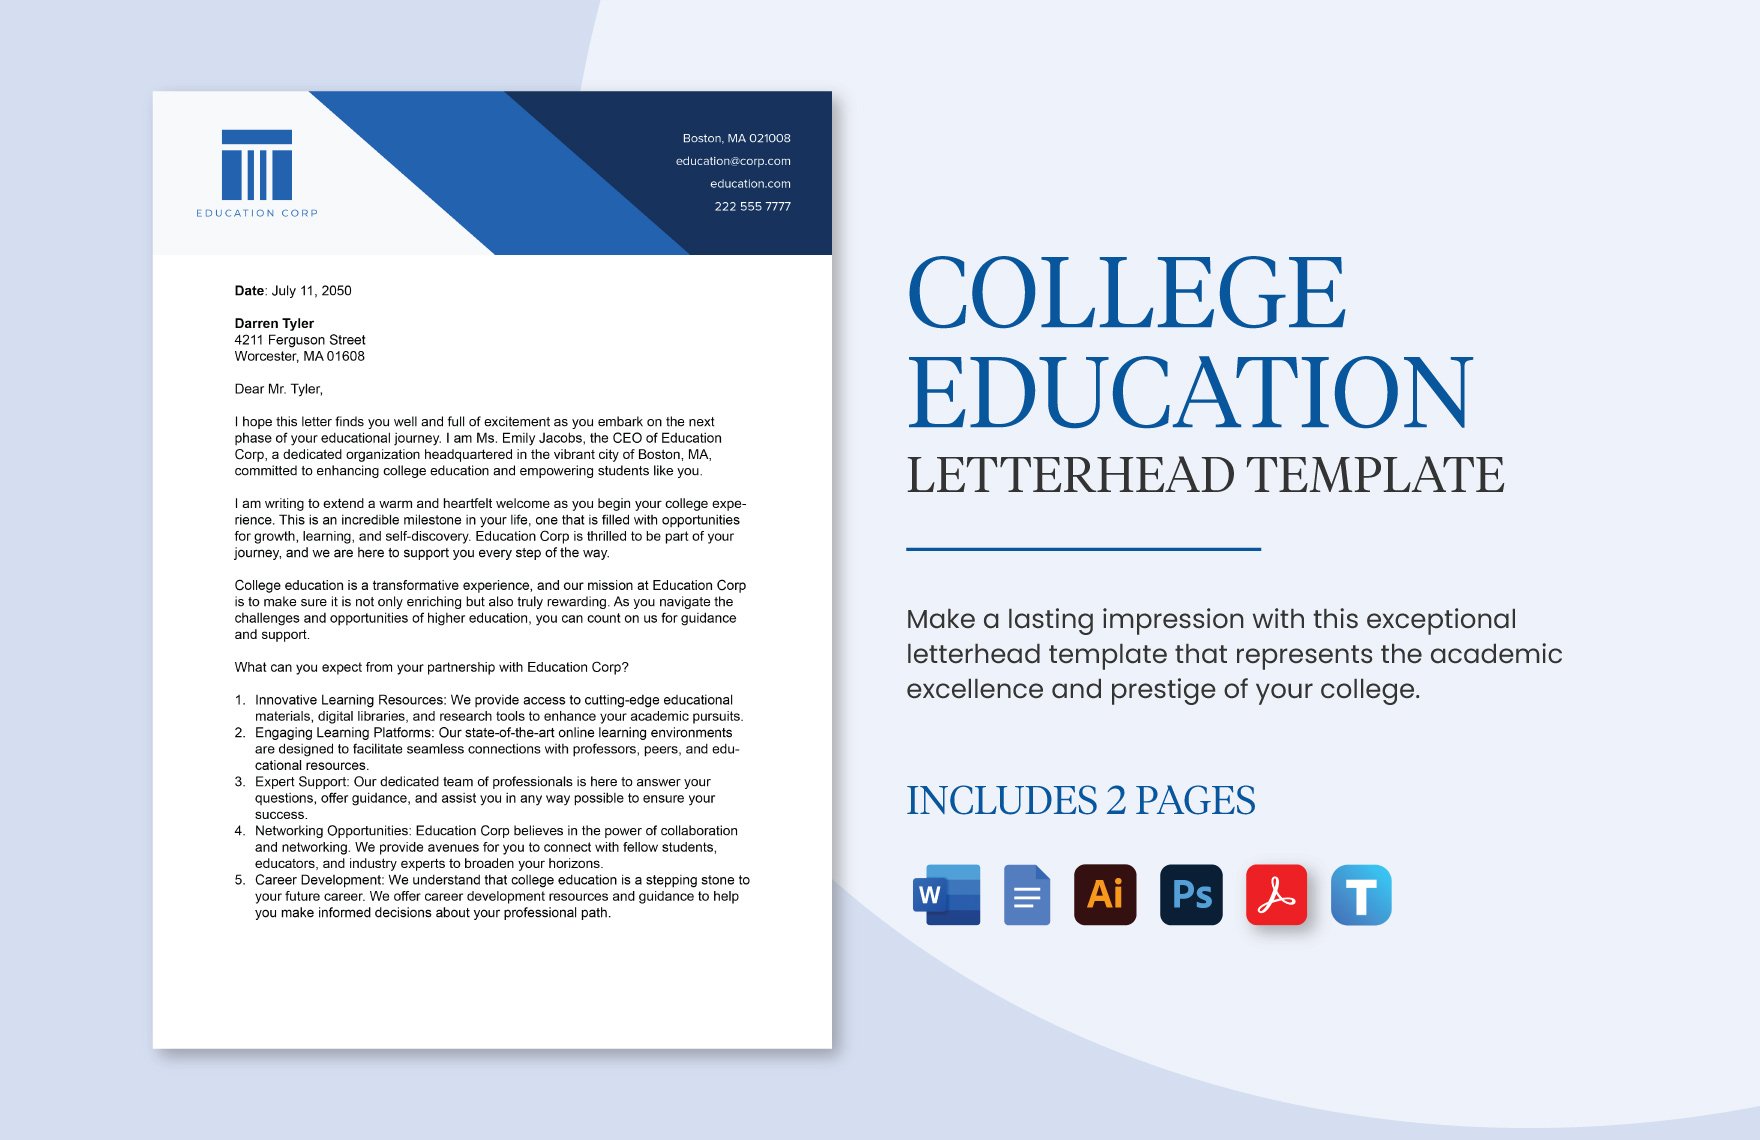 College Education Letterhead Template